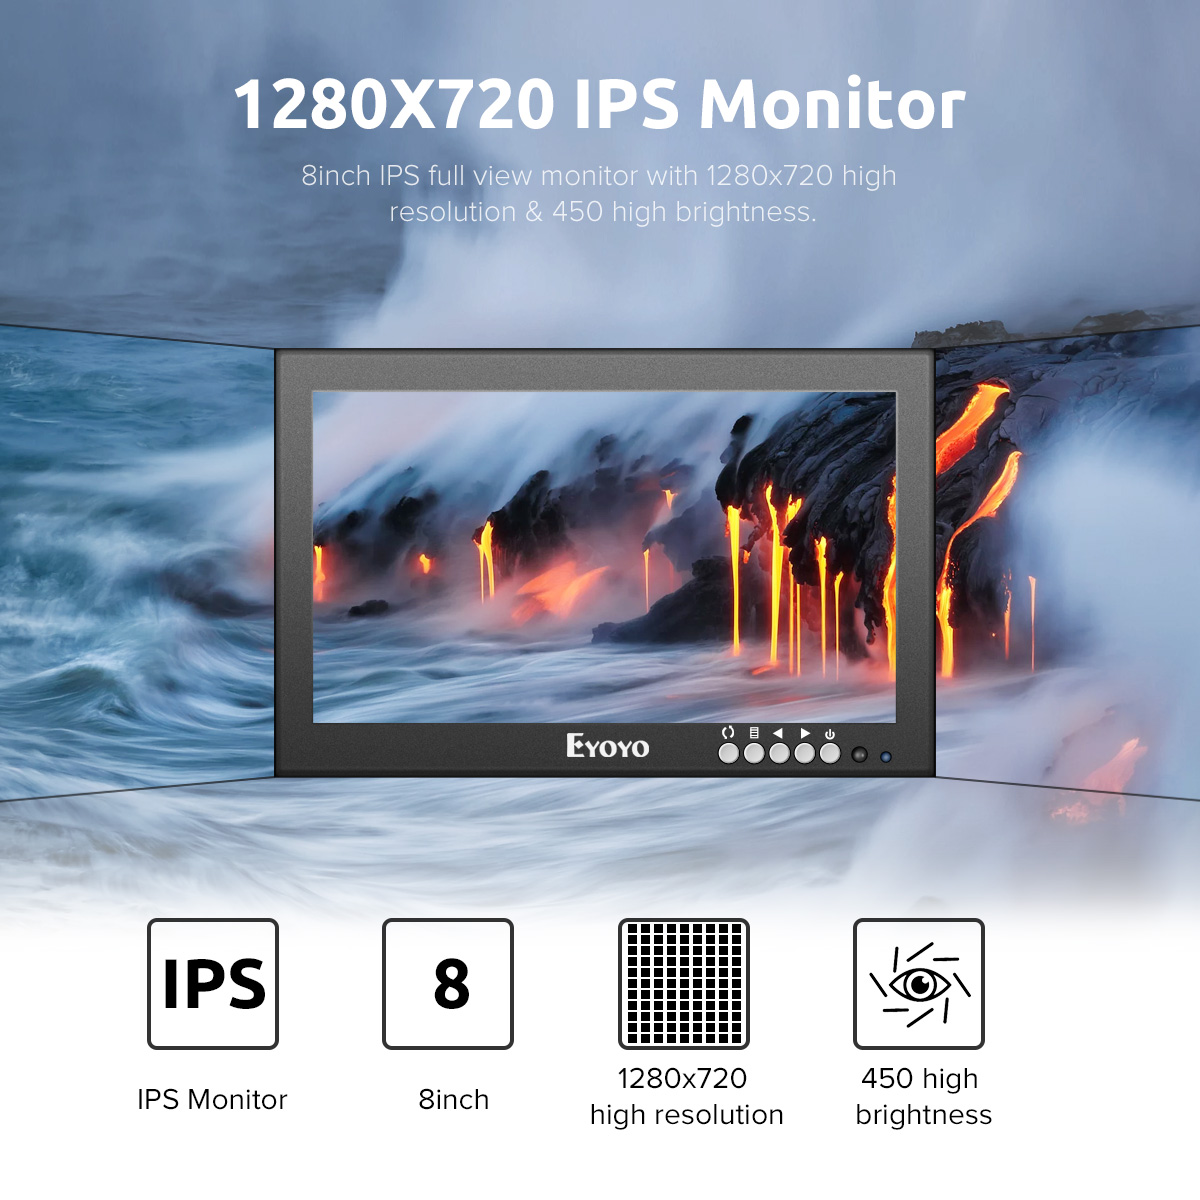 Eyoyo 8 inch Small HDMI LCD Monitor, Portable 1280x720 16:9 IPS Metal Housing Screen Support HDMI/VGA/AV/BNC Input